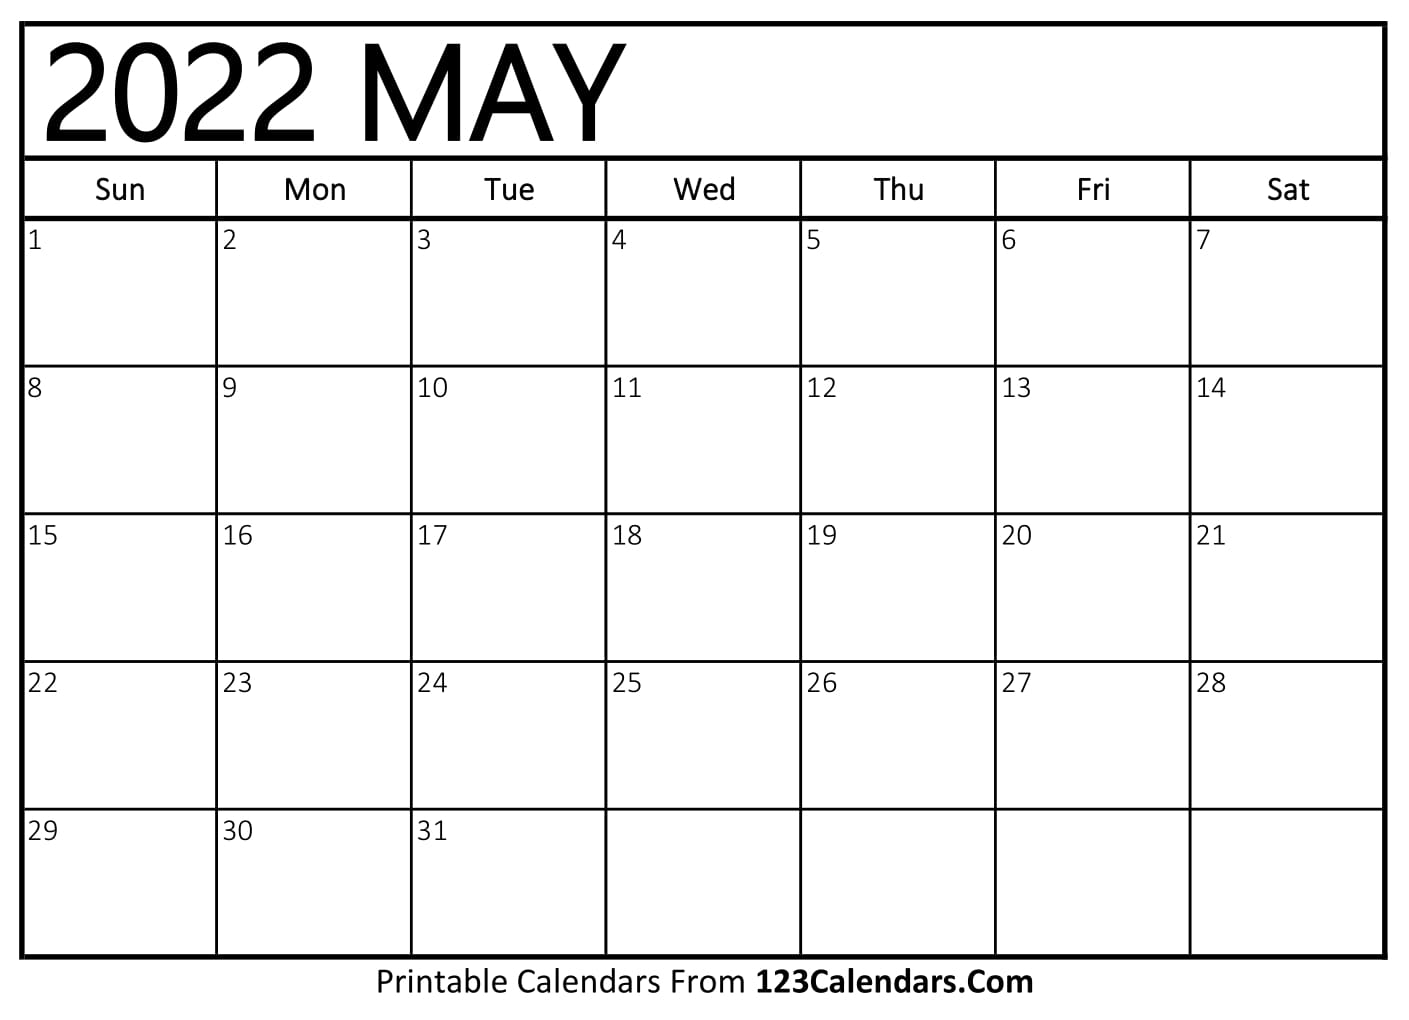 Printable 2022 Calendar May Printable May 2022 Calendar Templates - 123Calendars.com